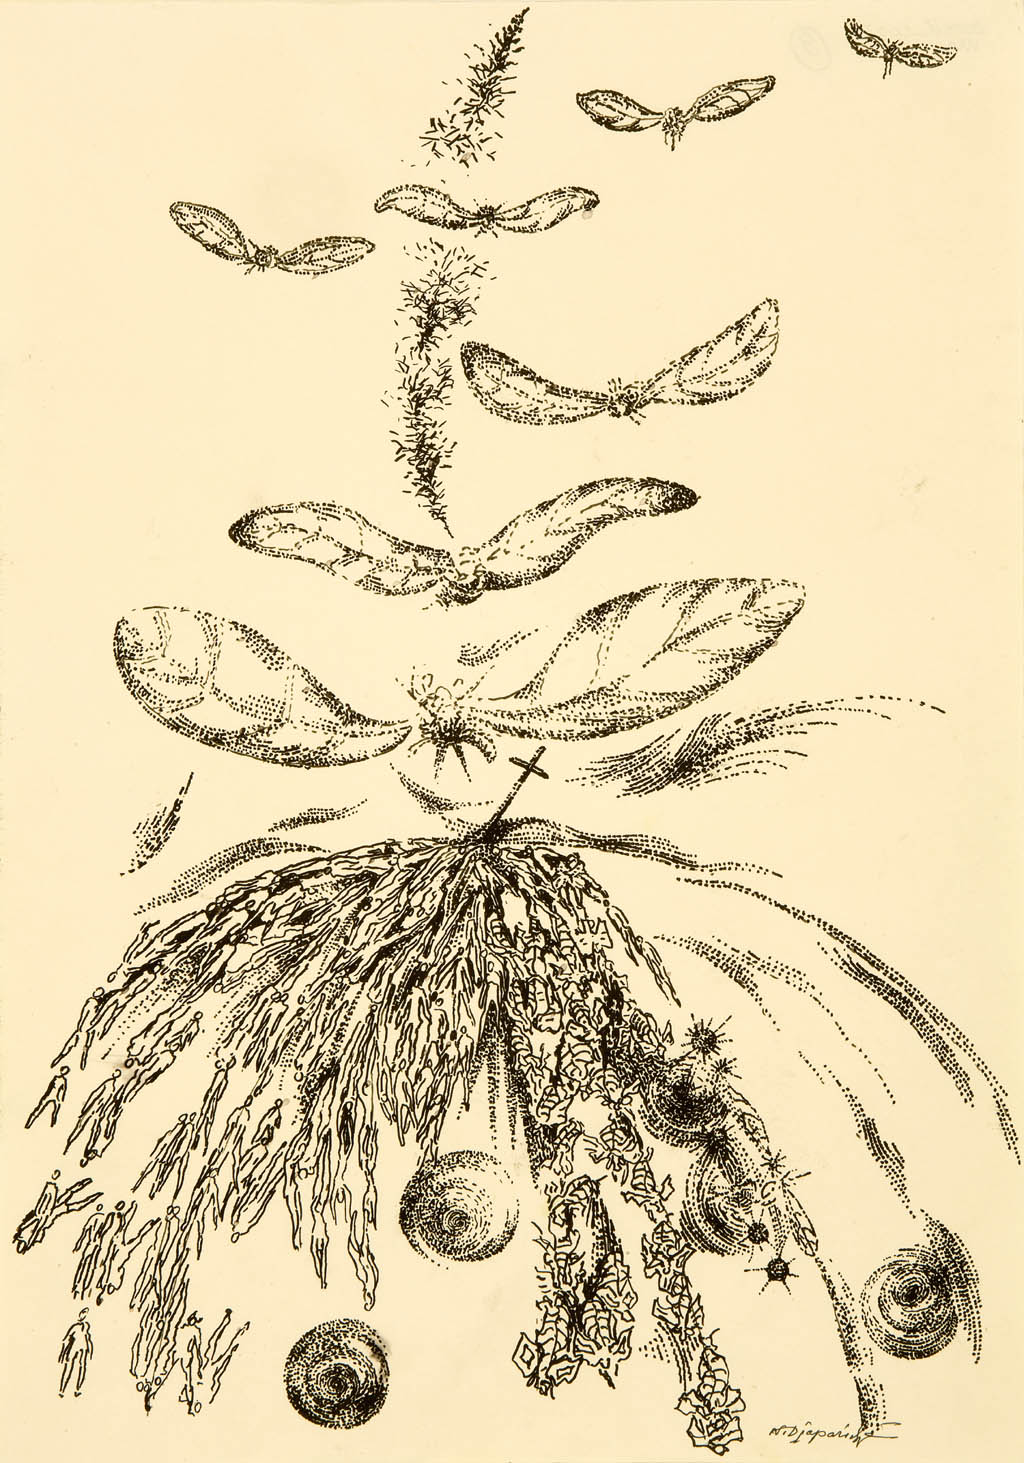 Nino Japaridze | L'effet papillon (The Butterfly Effect) | 2008 ink on tan paper